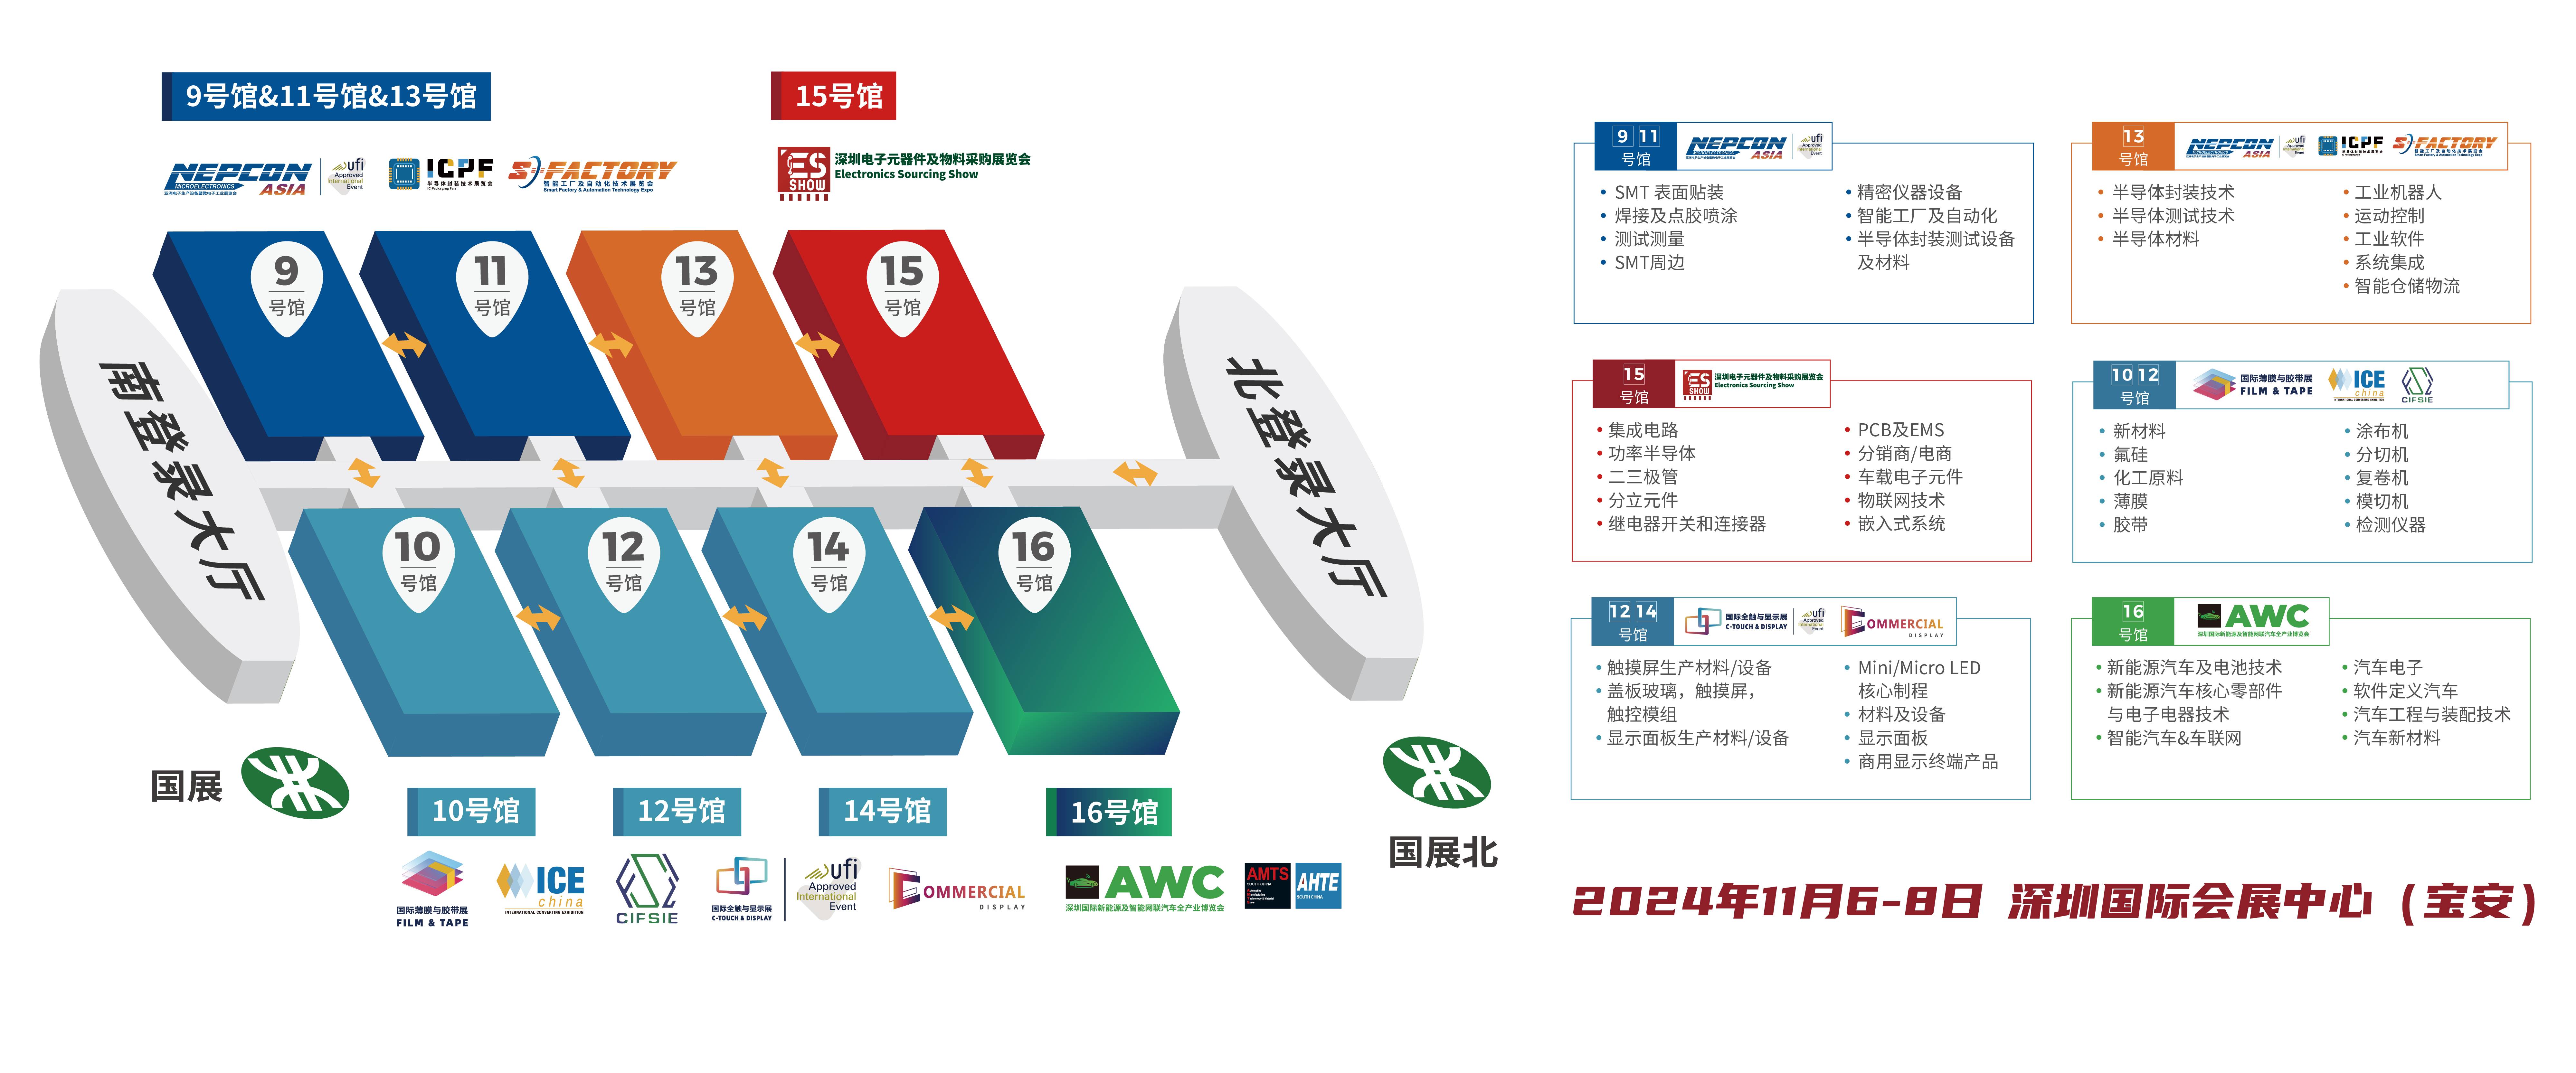 AP芯片 显示技术 深圳电子展 中国电子展 华南电子展